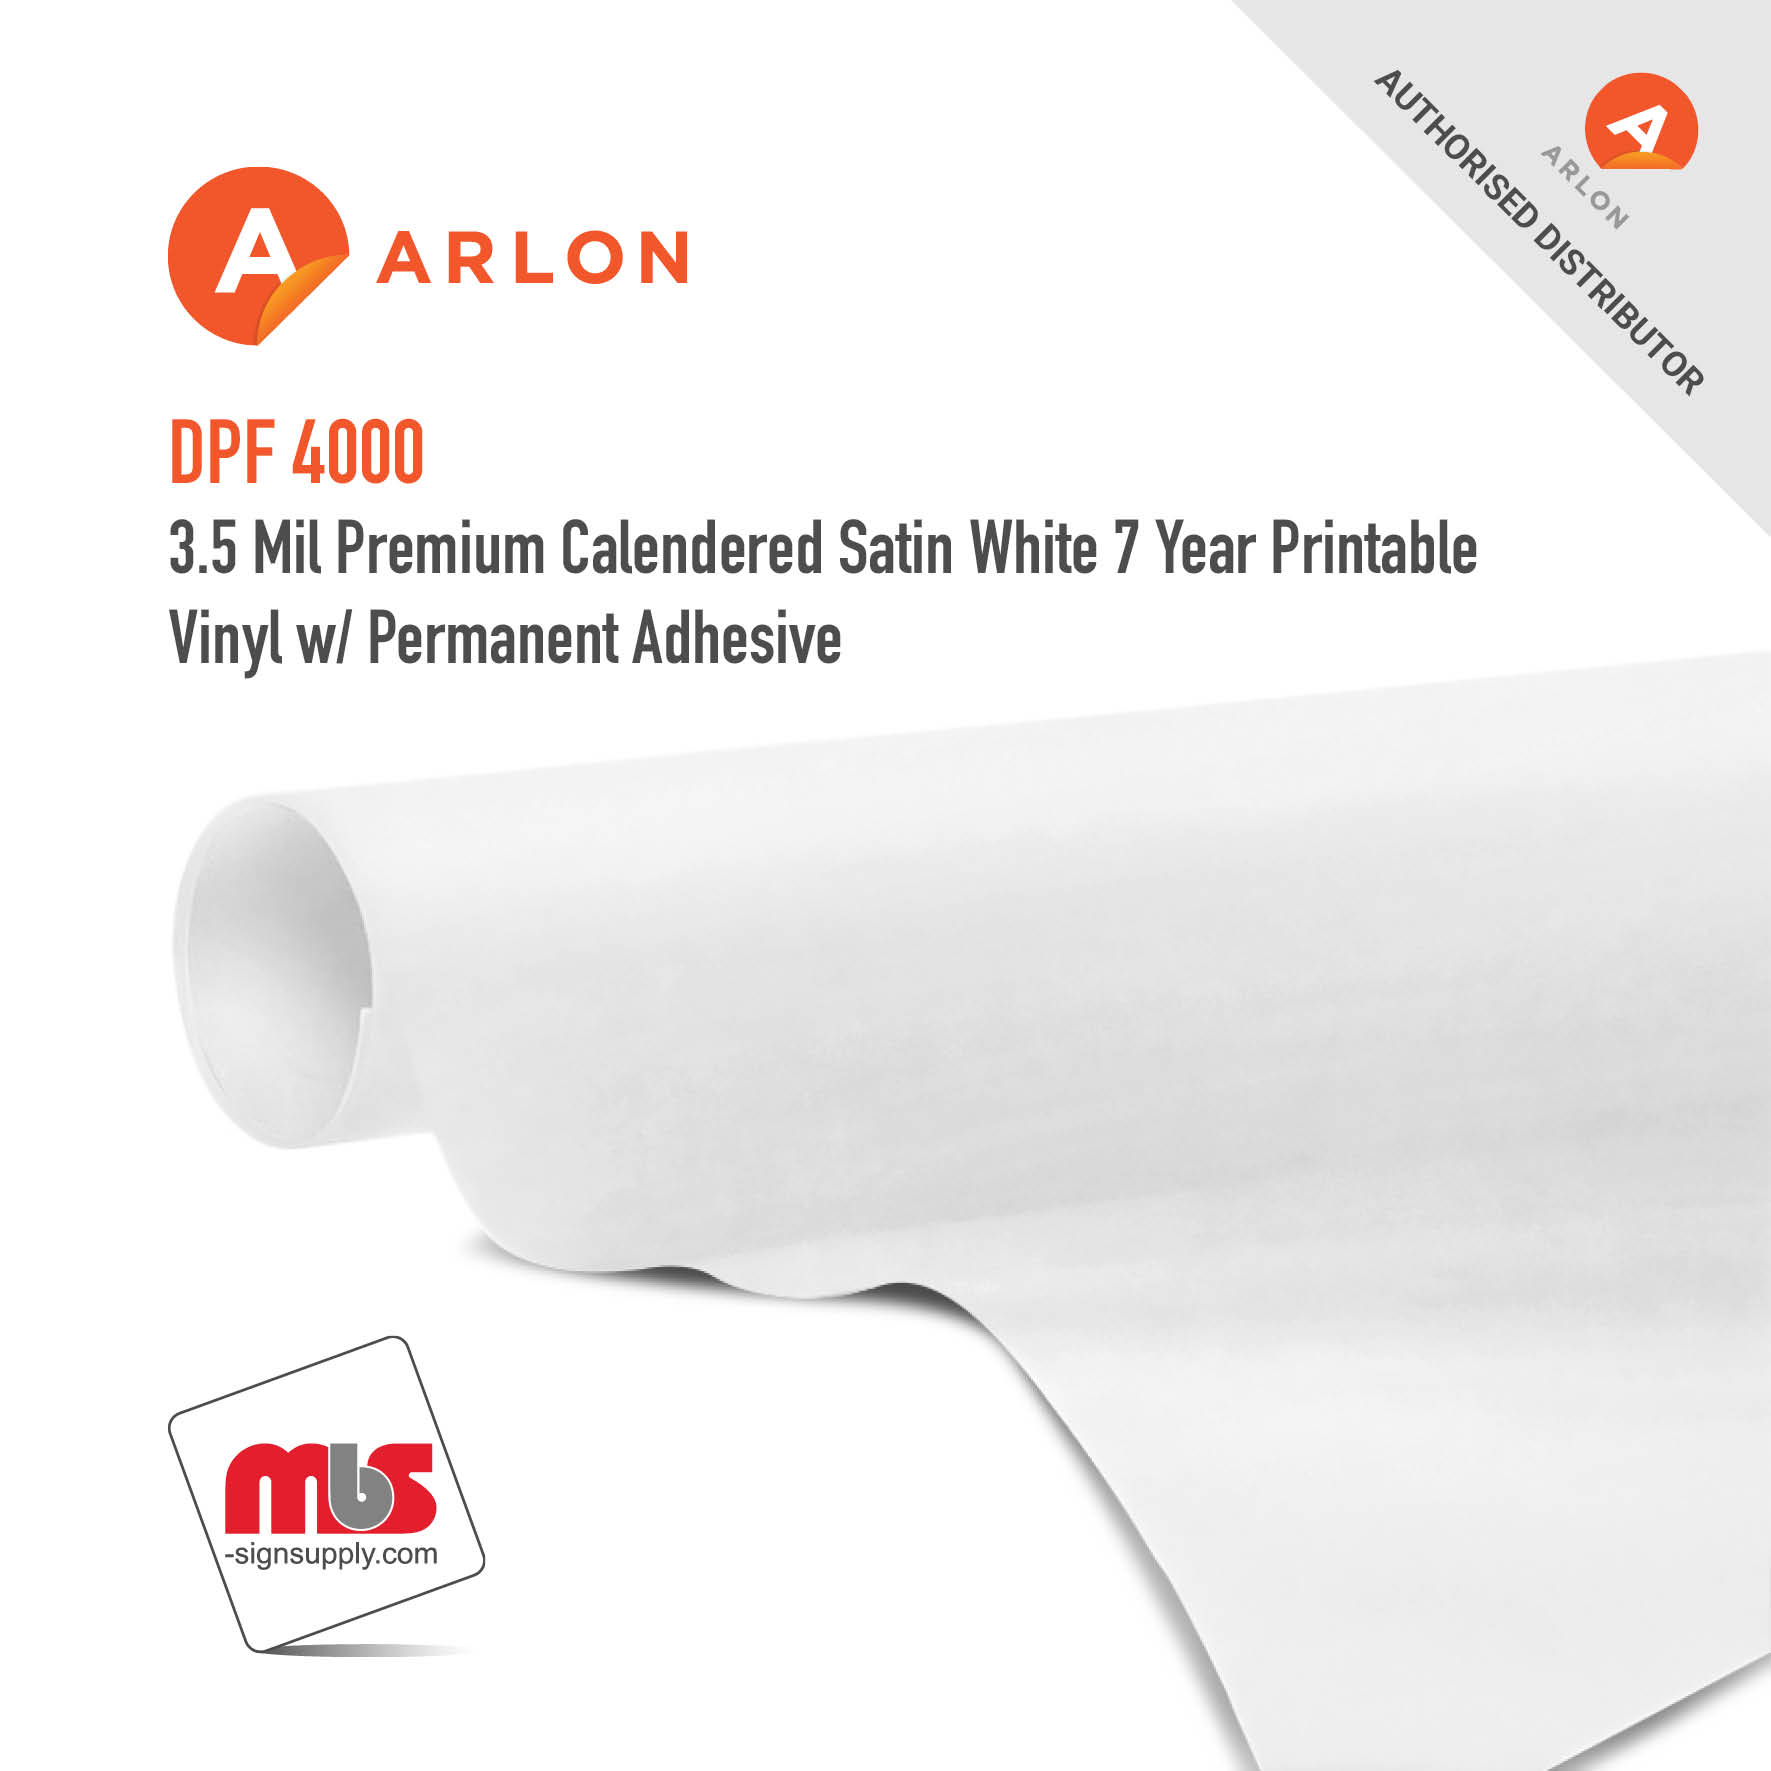 49'' x 50 Yard Roll - Arlon DPF 4000 3.5 Mil Premium Calendered Satin White 7 Year Printable Vinyl w/ Permanent Adhesive